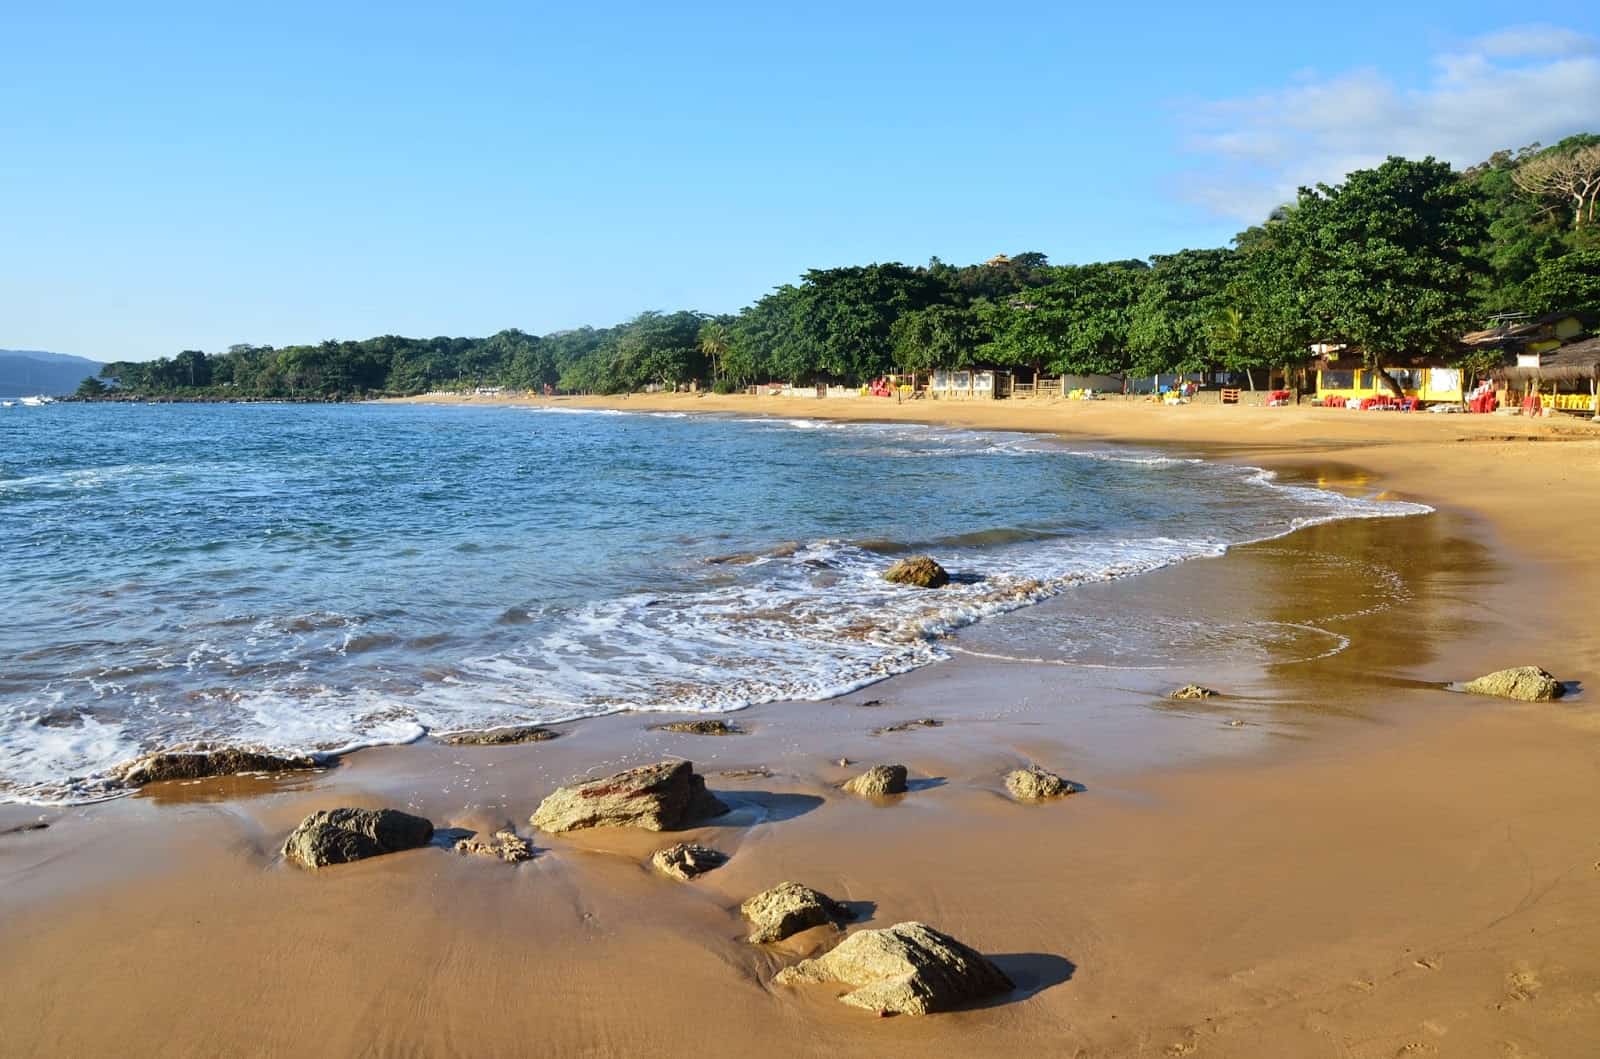 Praia do Curral in Ilhabela, Brazil